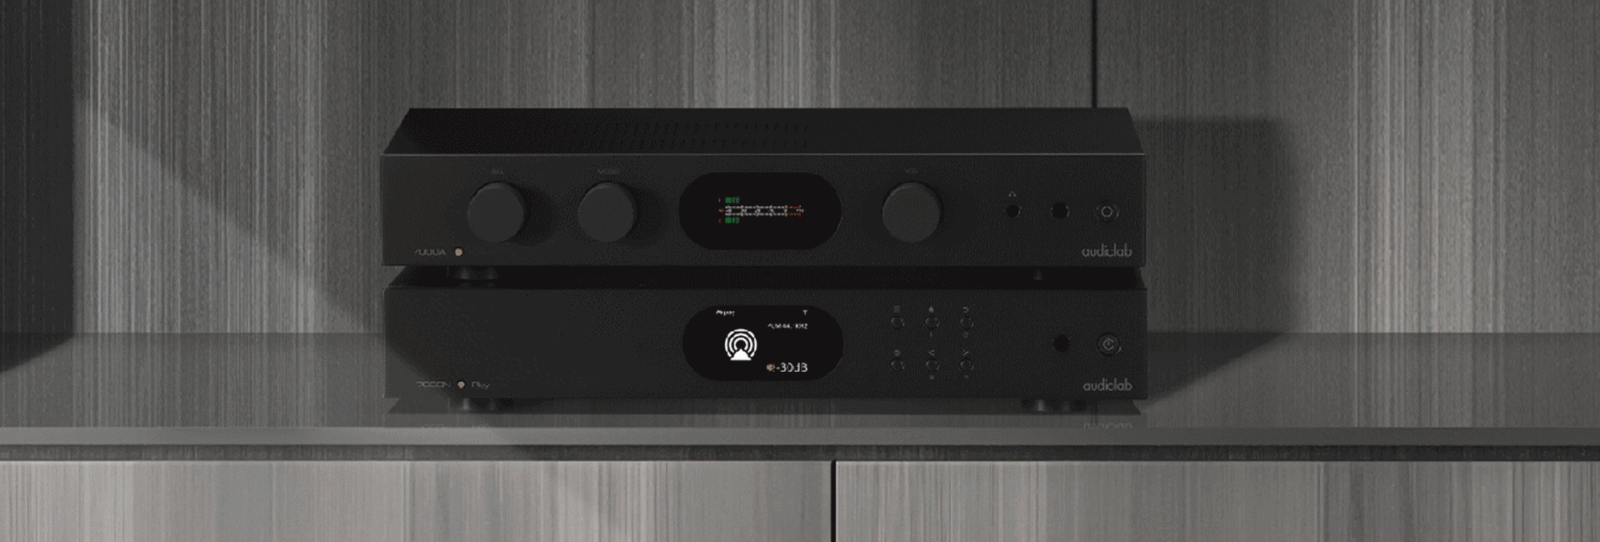 Audiolab 7000 serie